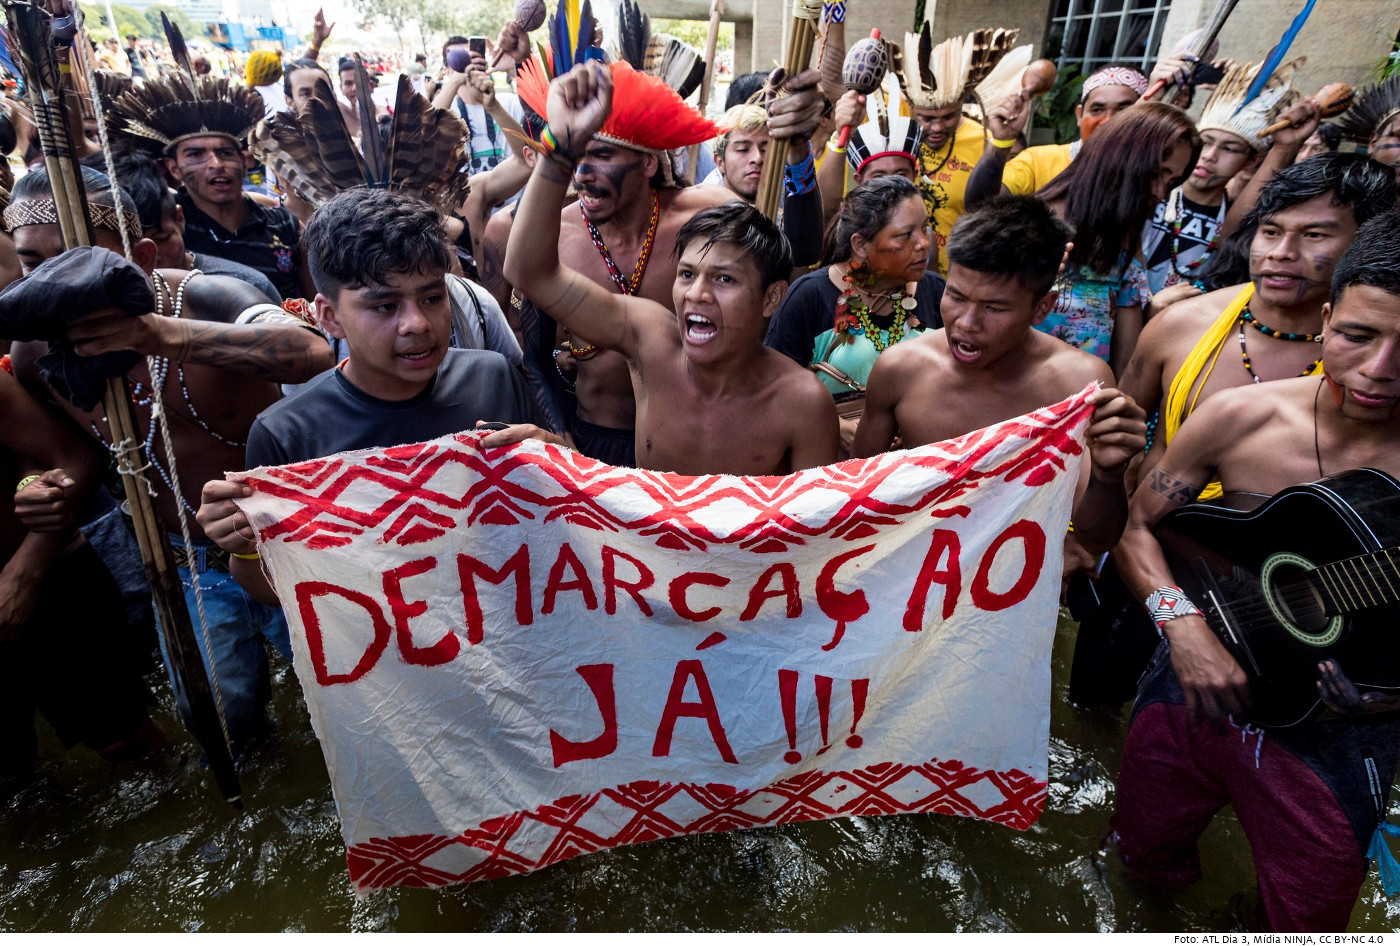 Indigener Protestcamp "Terra Livre" 2019 in Brasilia. Auf dem Transparent steht: "Demarkierung jetzt!!!". Foto (Symbolfoto): ATL Dia 3 • 26/04/2019 • Brasília DF, Mídia NINJA, CC BY-NC 4.0